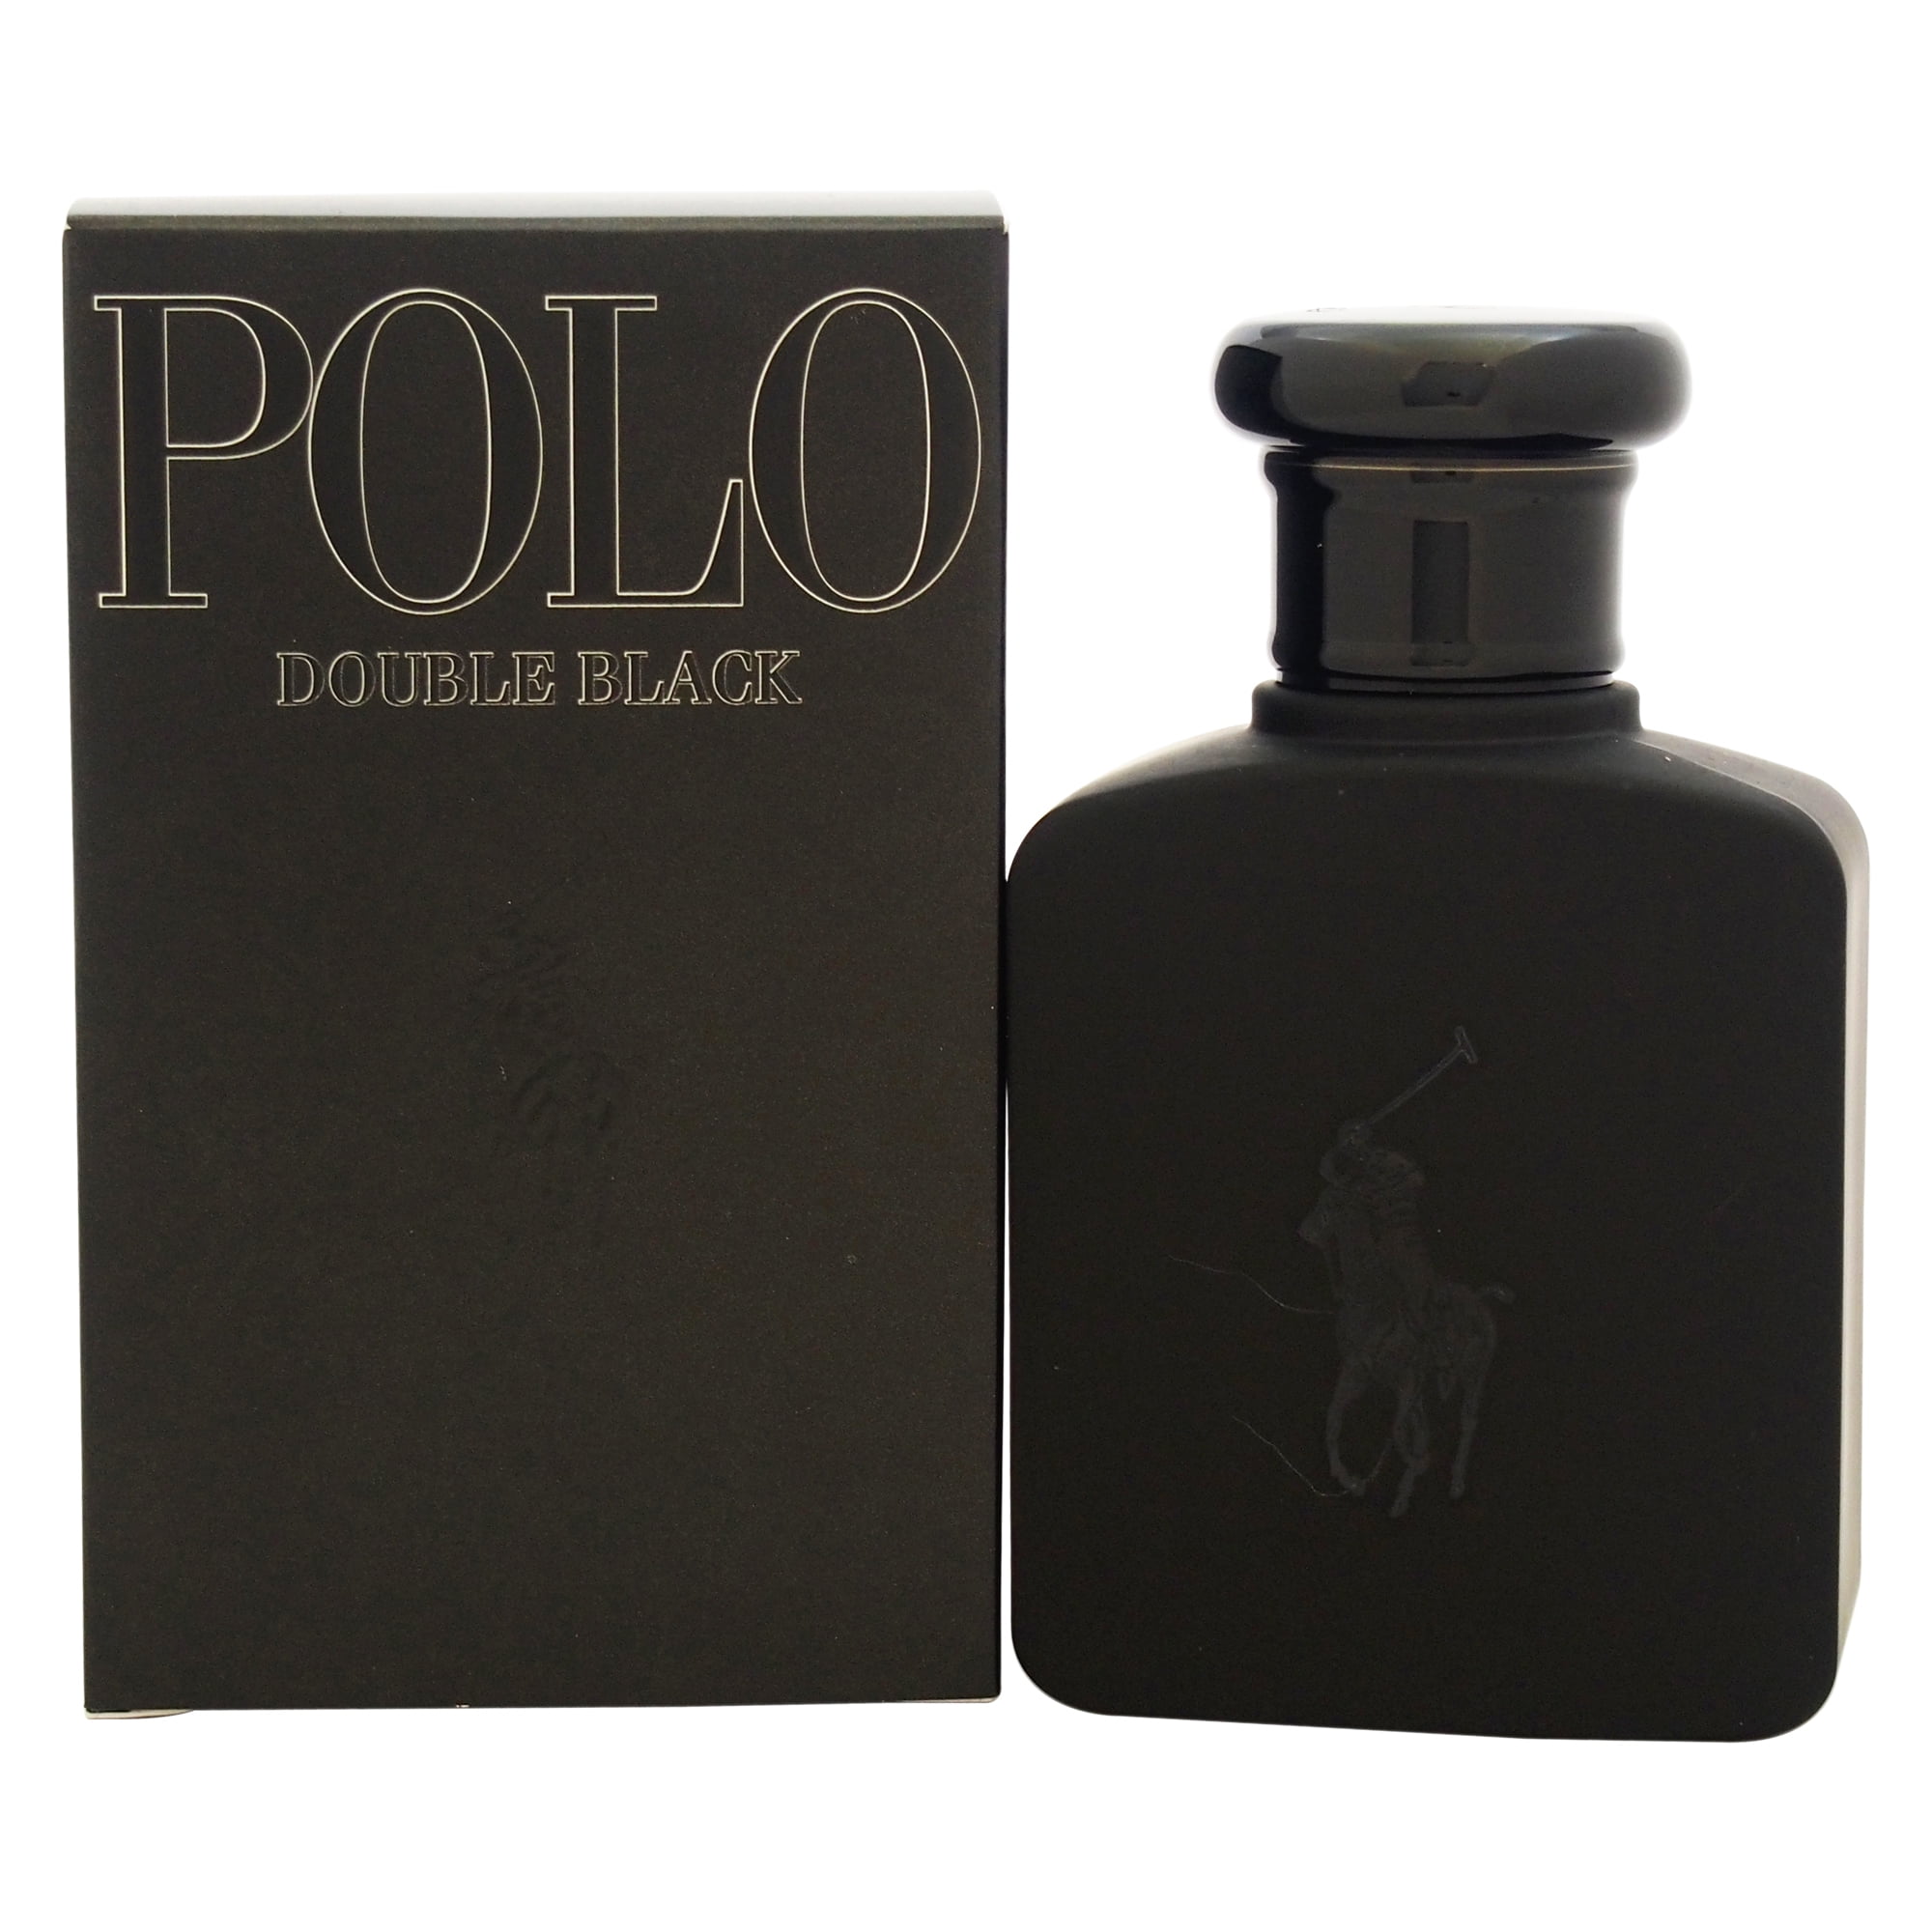 Polo Double Black by Ralph Lauren 2.5 oz EDT Spray 